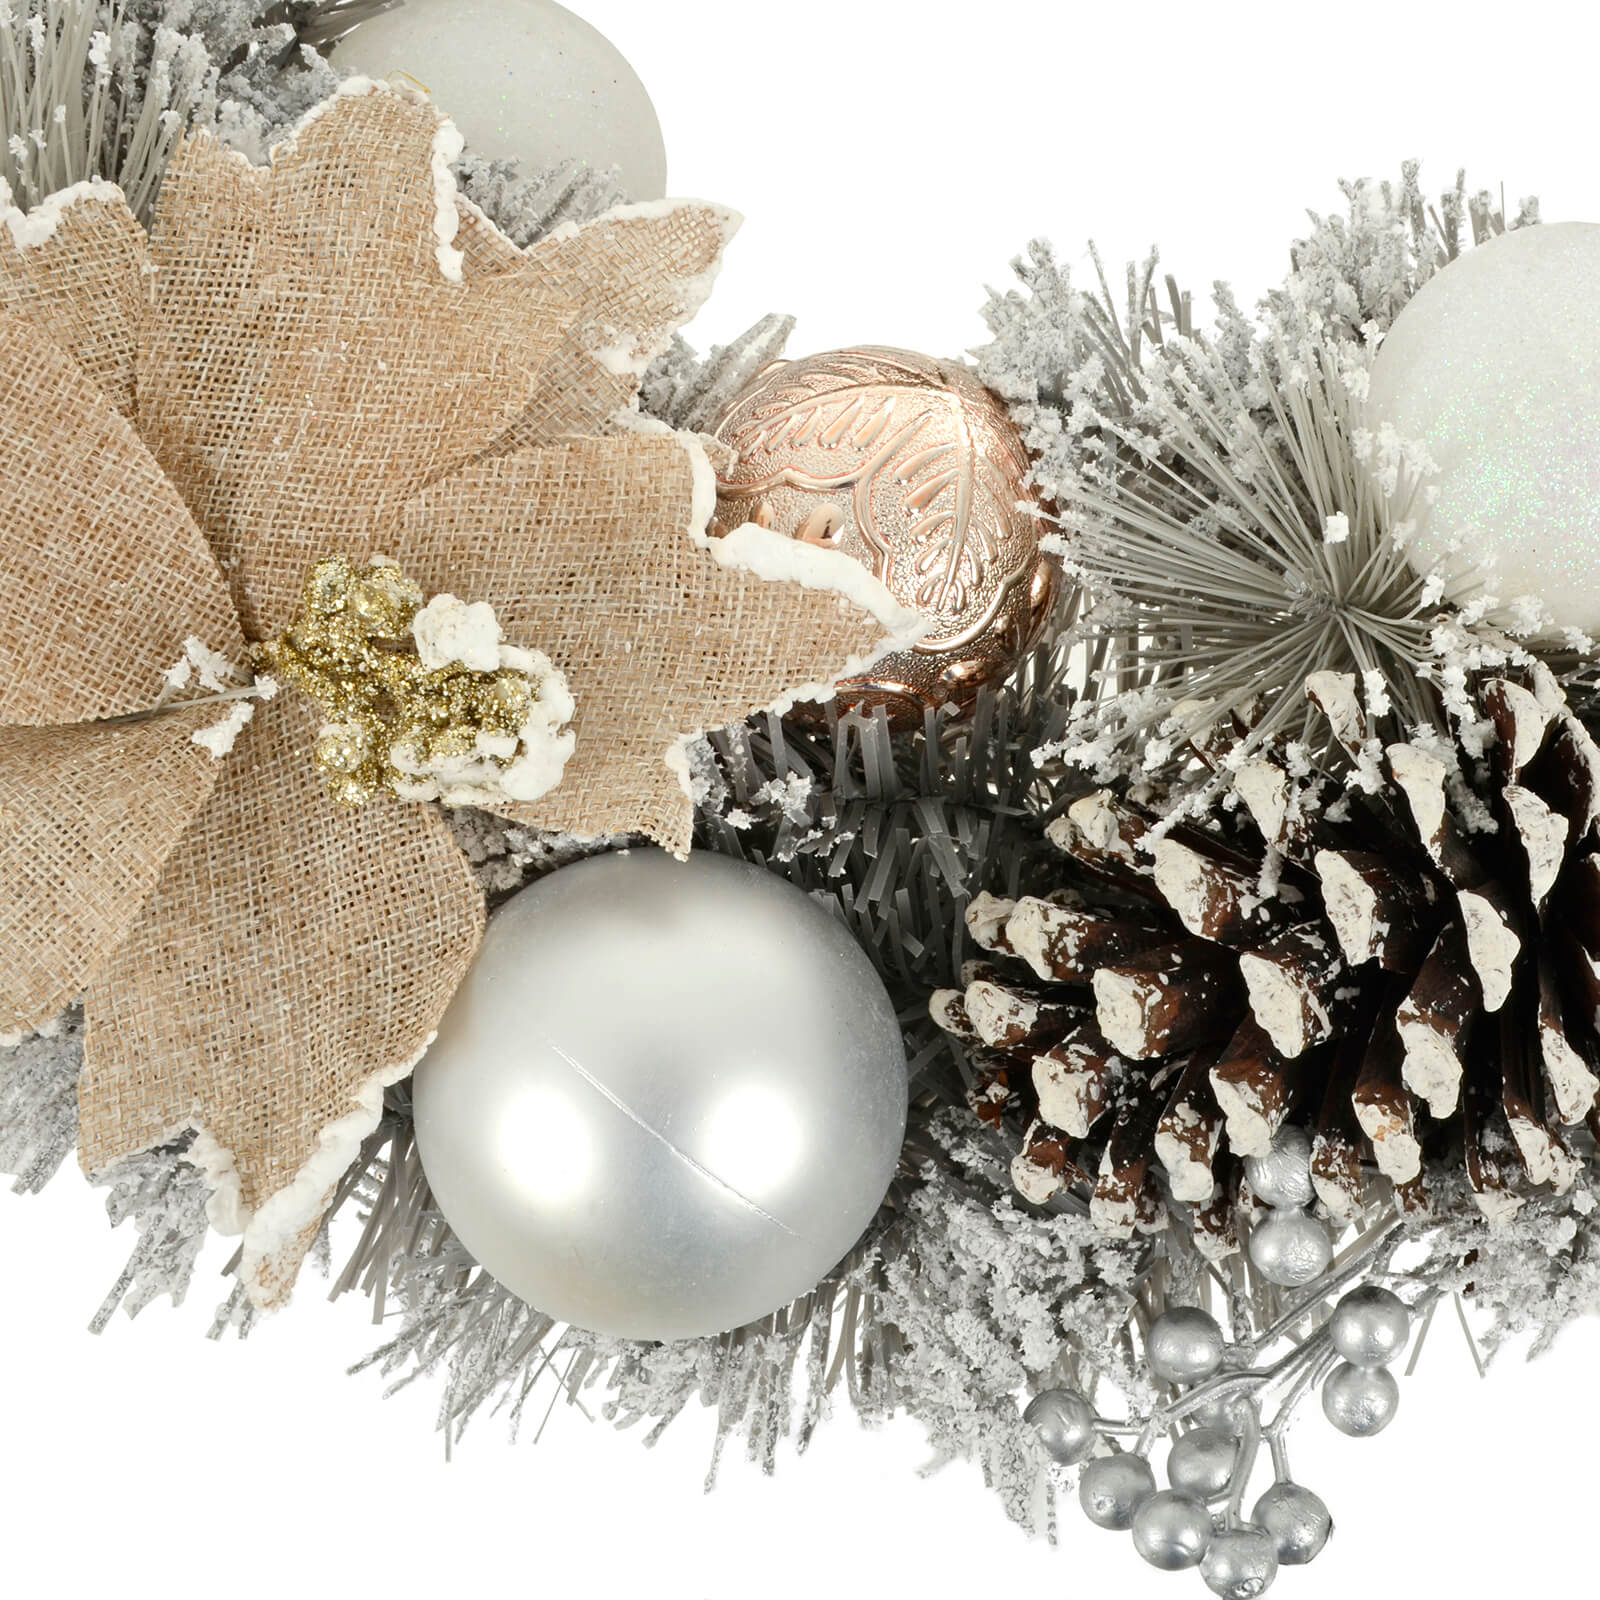 Mr Crimbo Grey Snowy 50cm Wreath With Gold/Silver Decorations - MrCrimbo.co.uk -XS7171 - -Gold